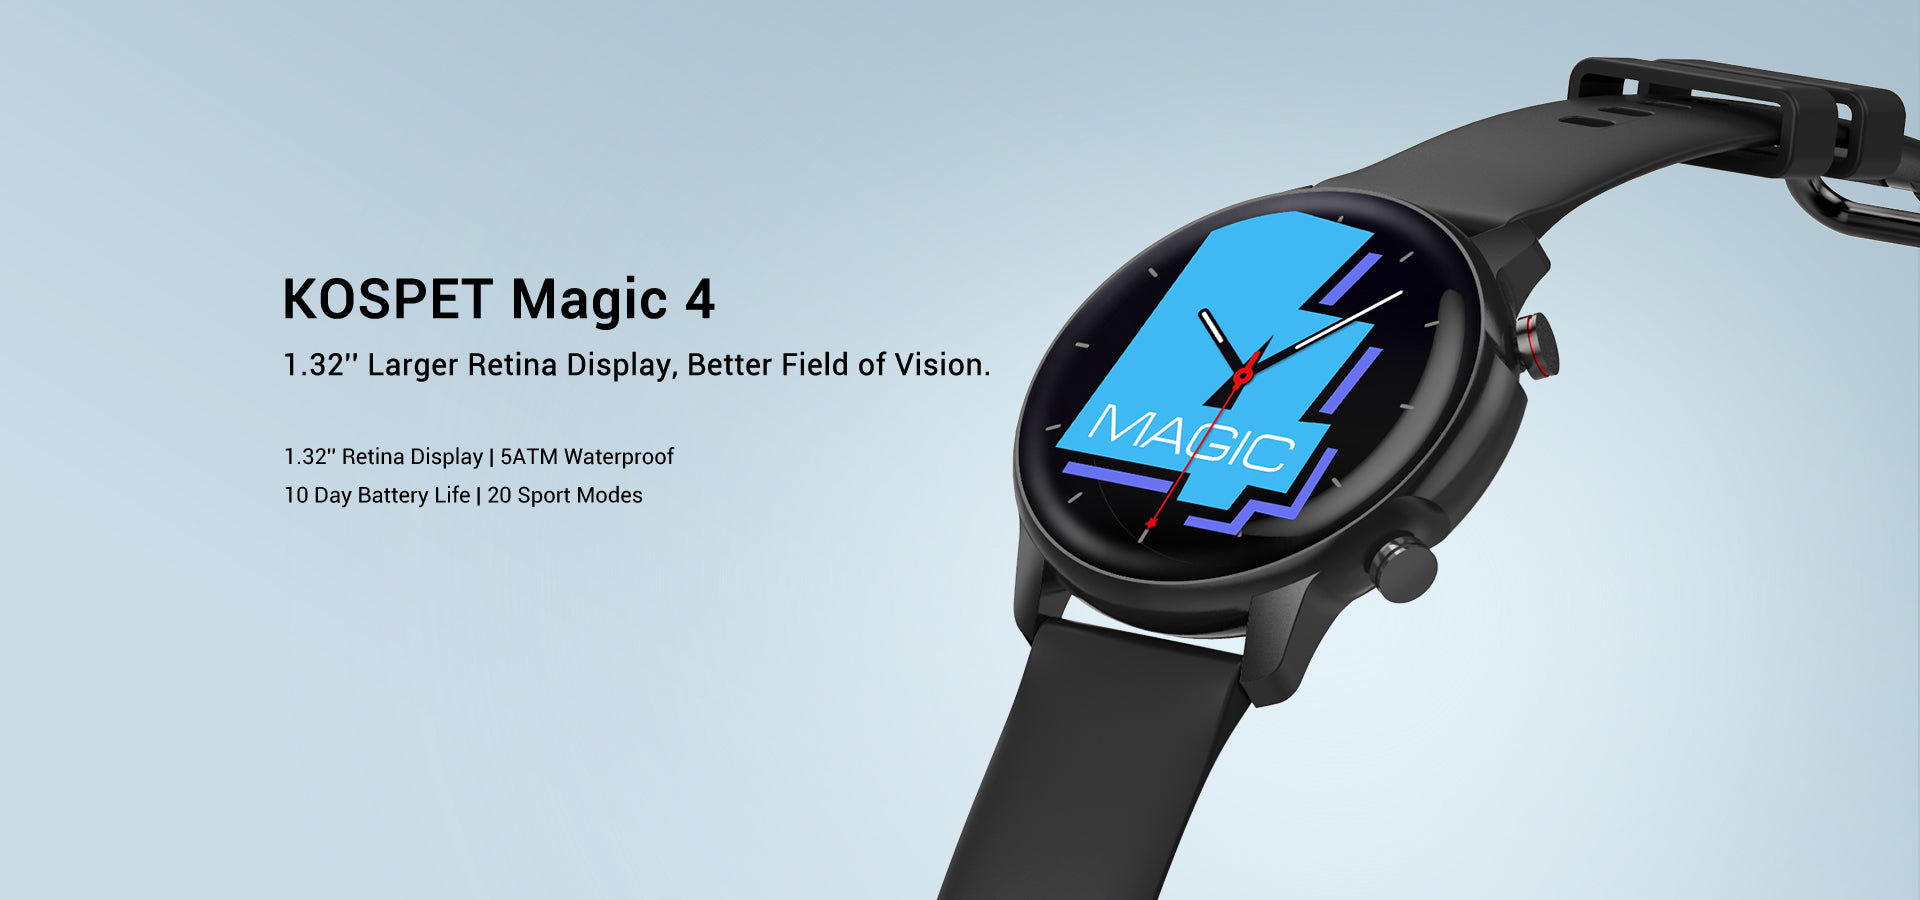 KOSPET MAGIC 4 Smartwatch-1.32“Larger Retina Display, Better Field of Vision